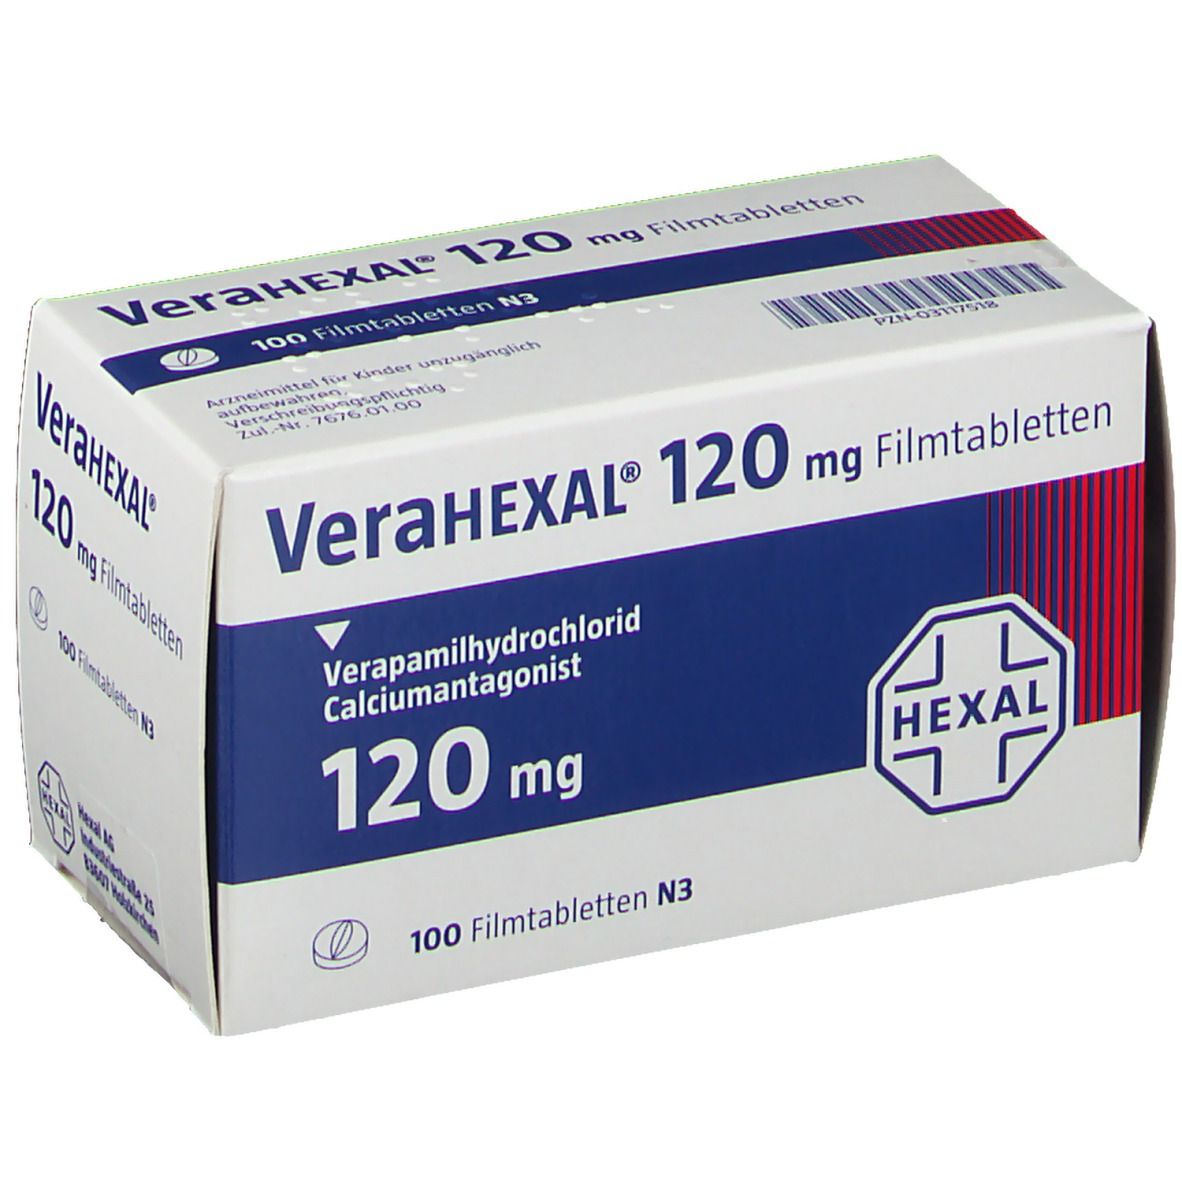 VeraHEXAL® 120 mg